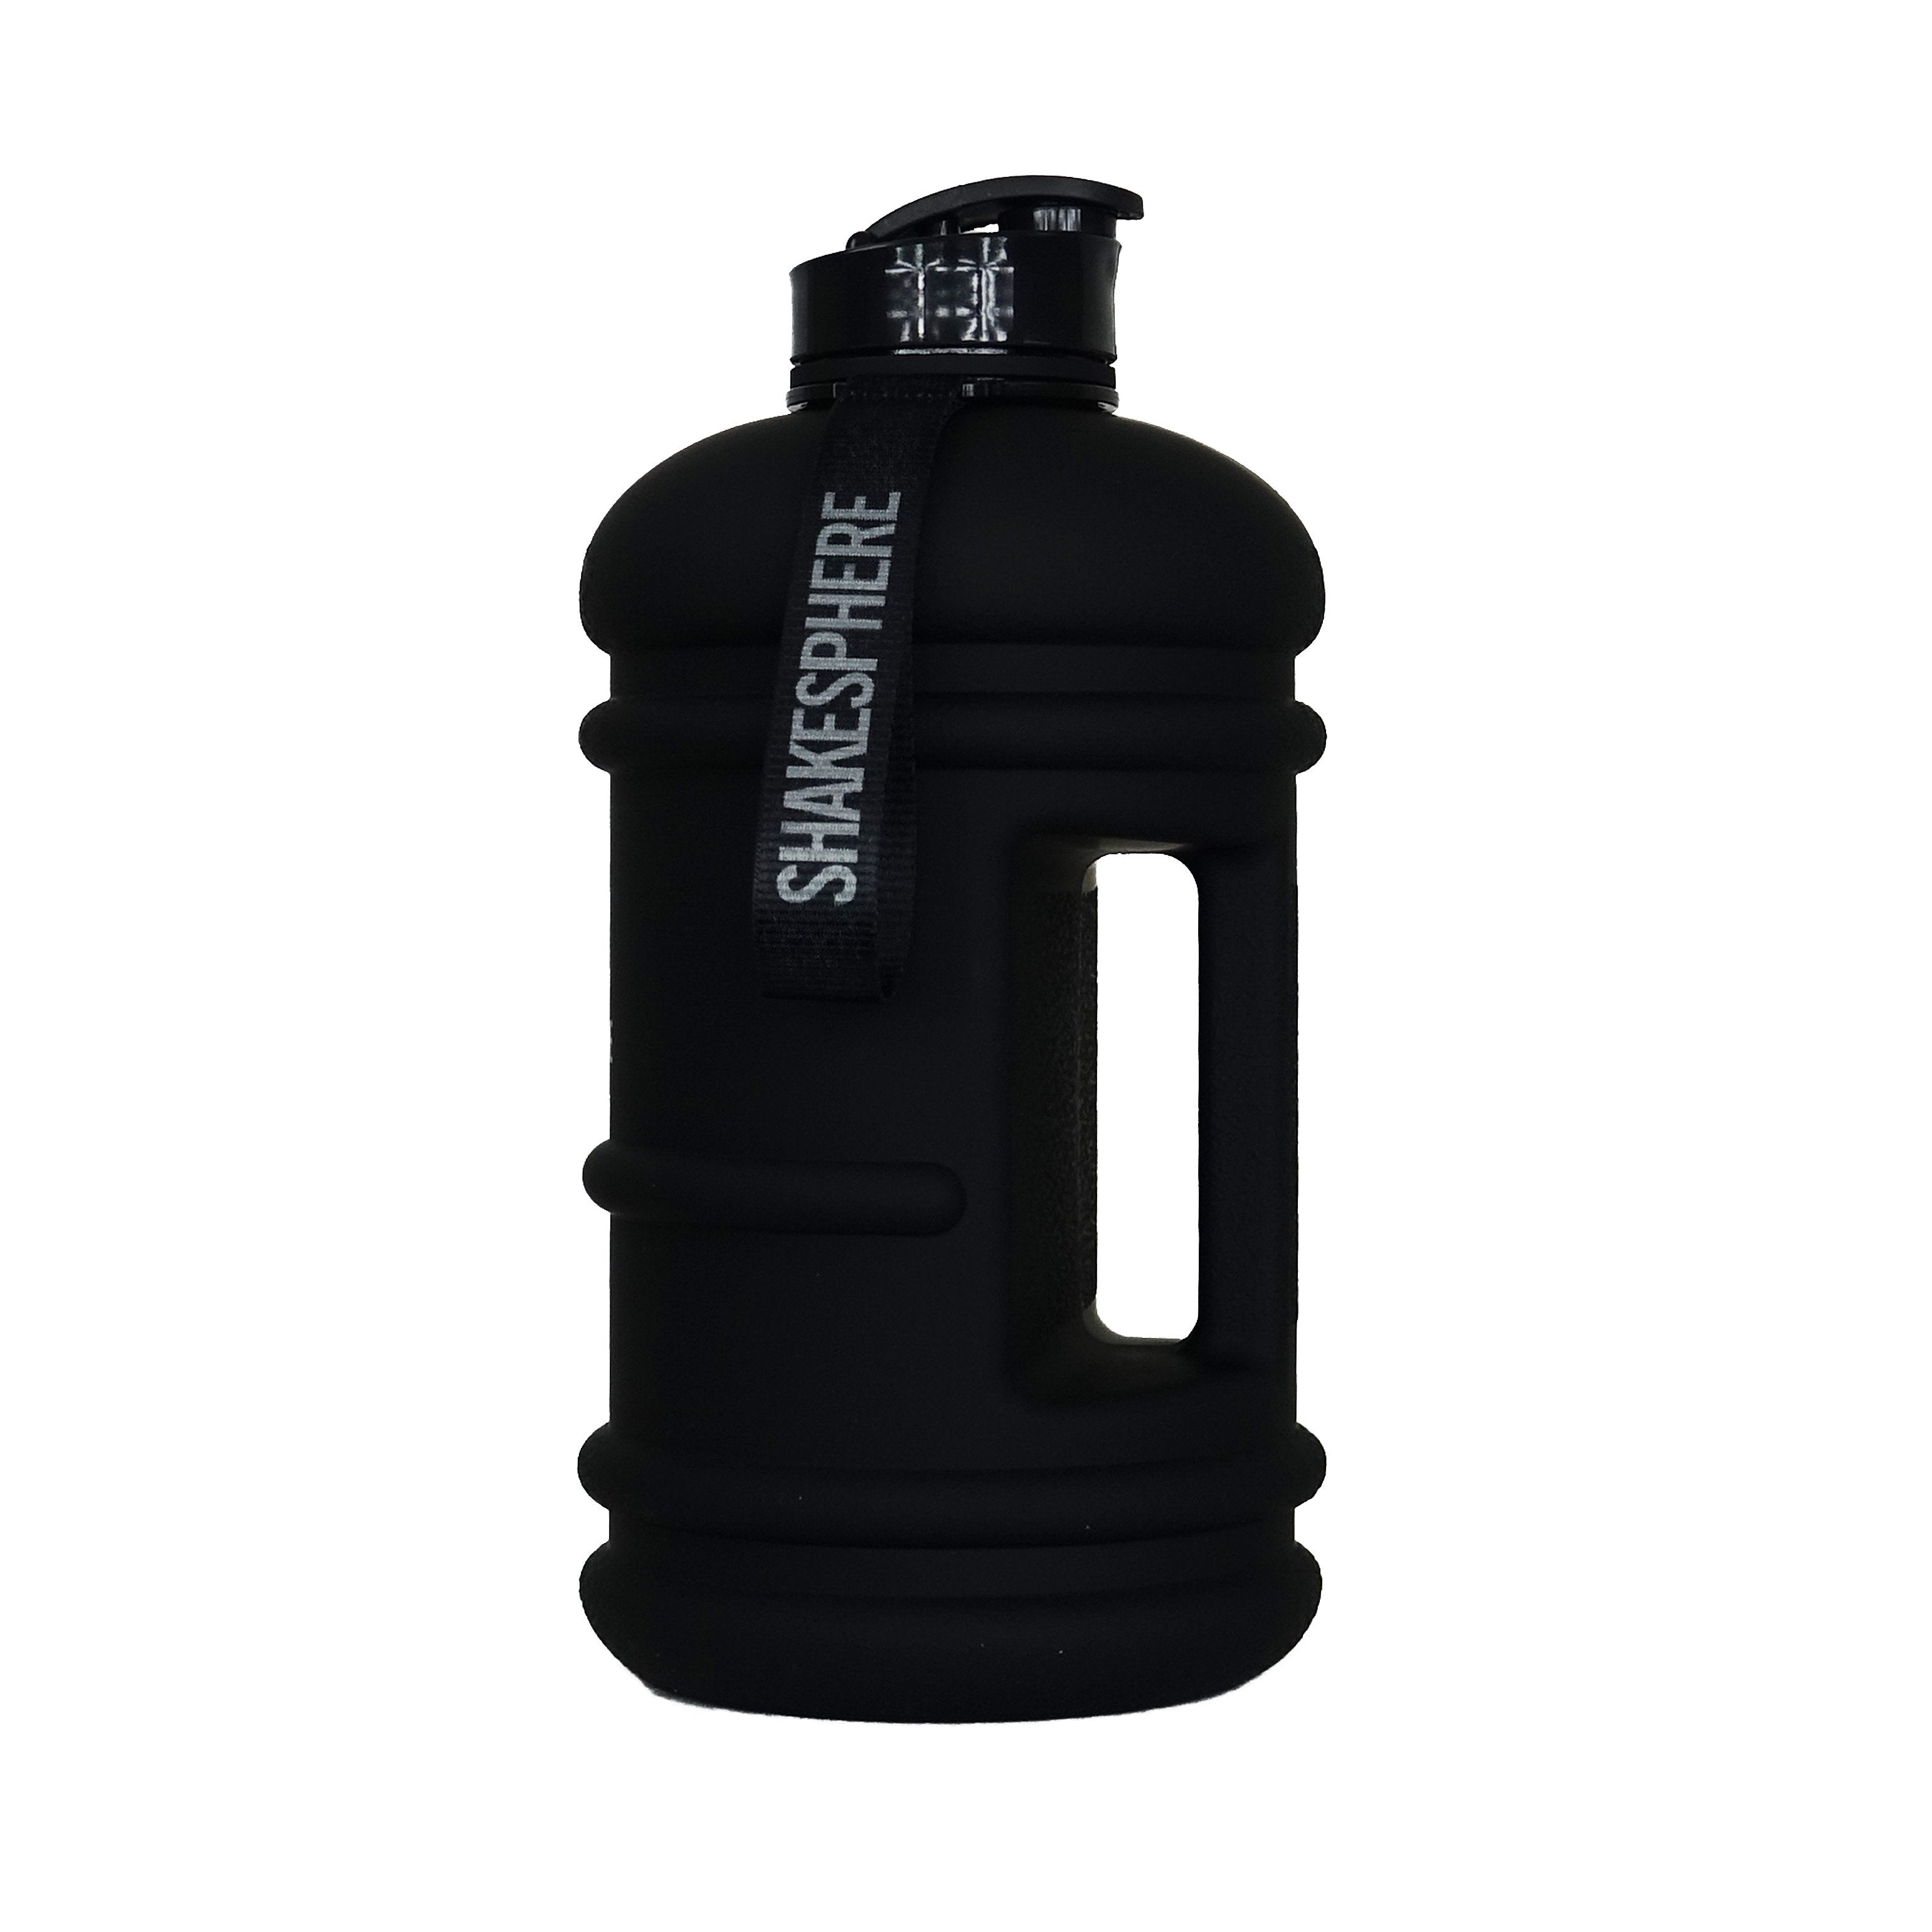 2.2L ShakeSphere Hydration Jug Matte Black/Black Logo - ShakeSphere